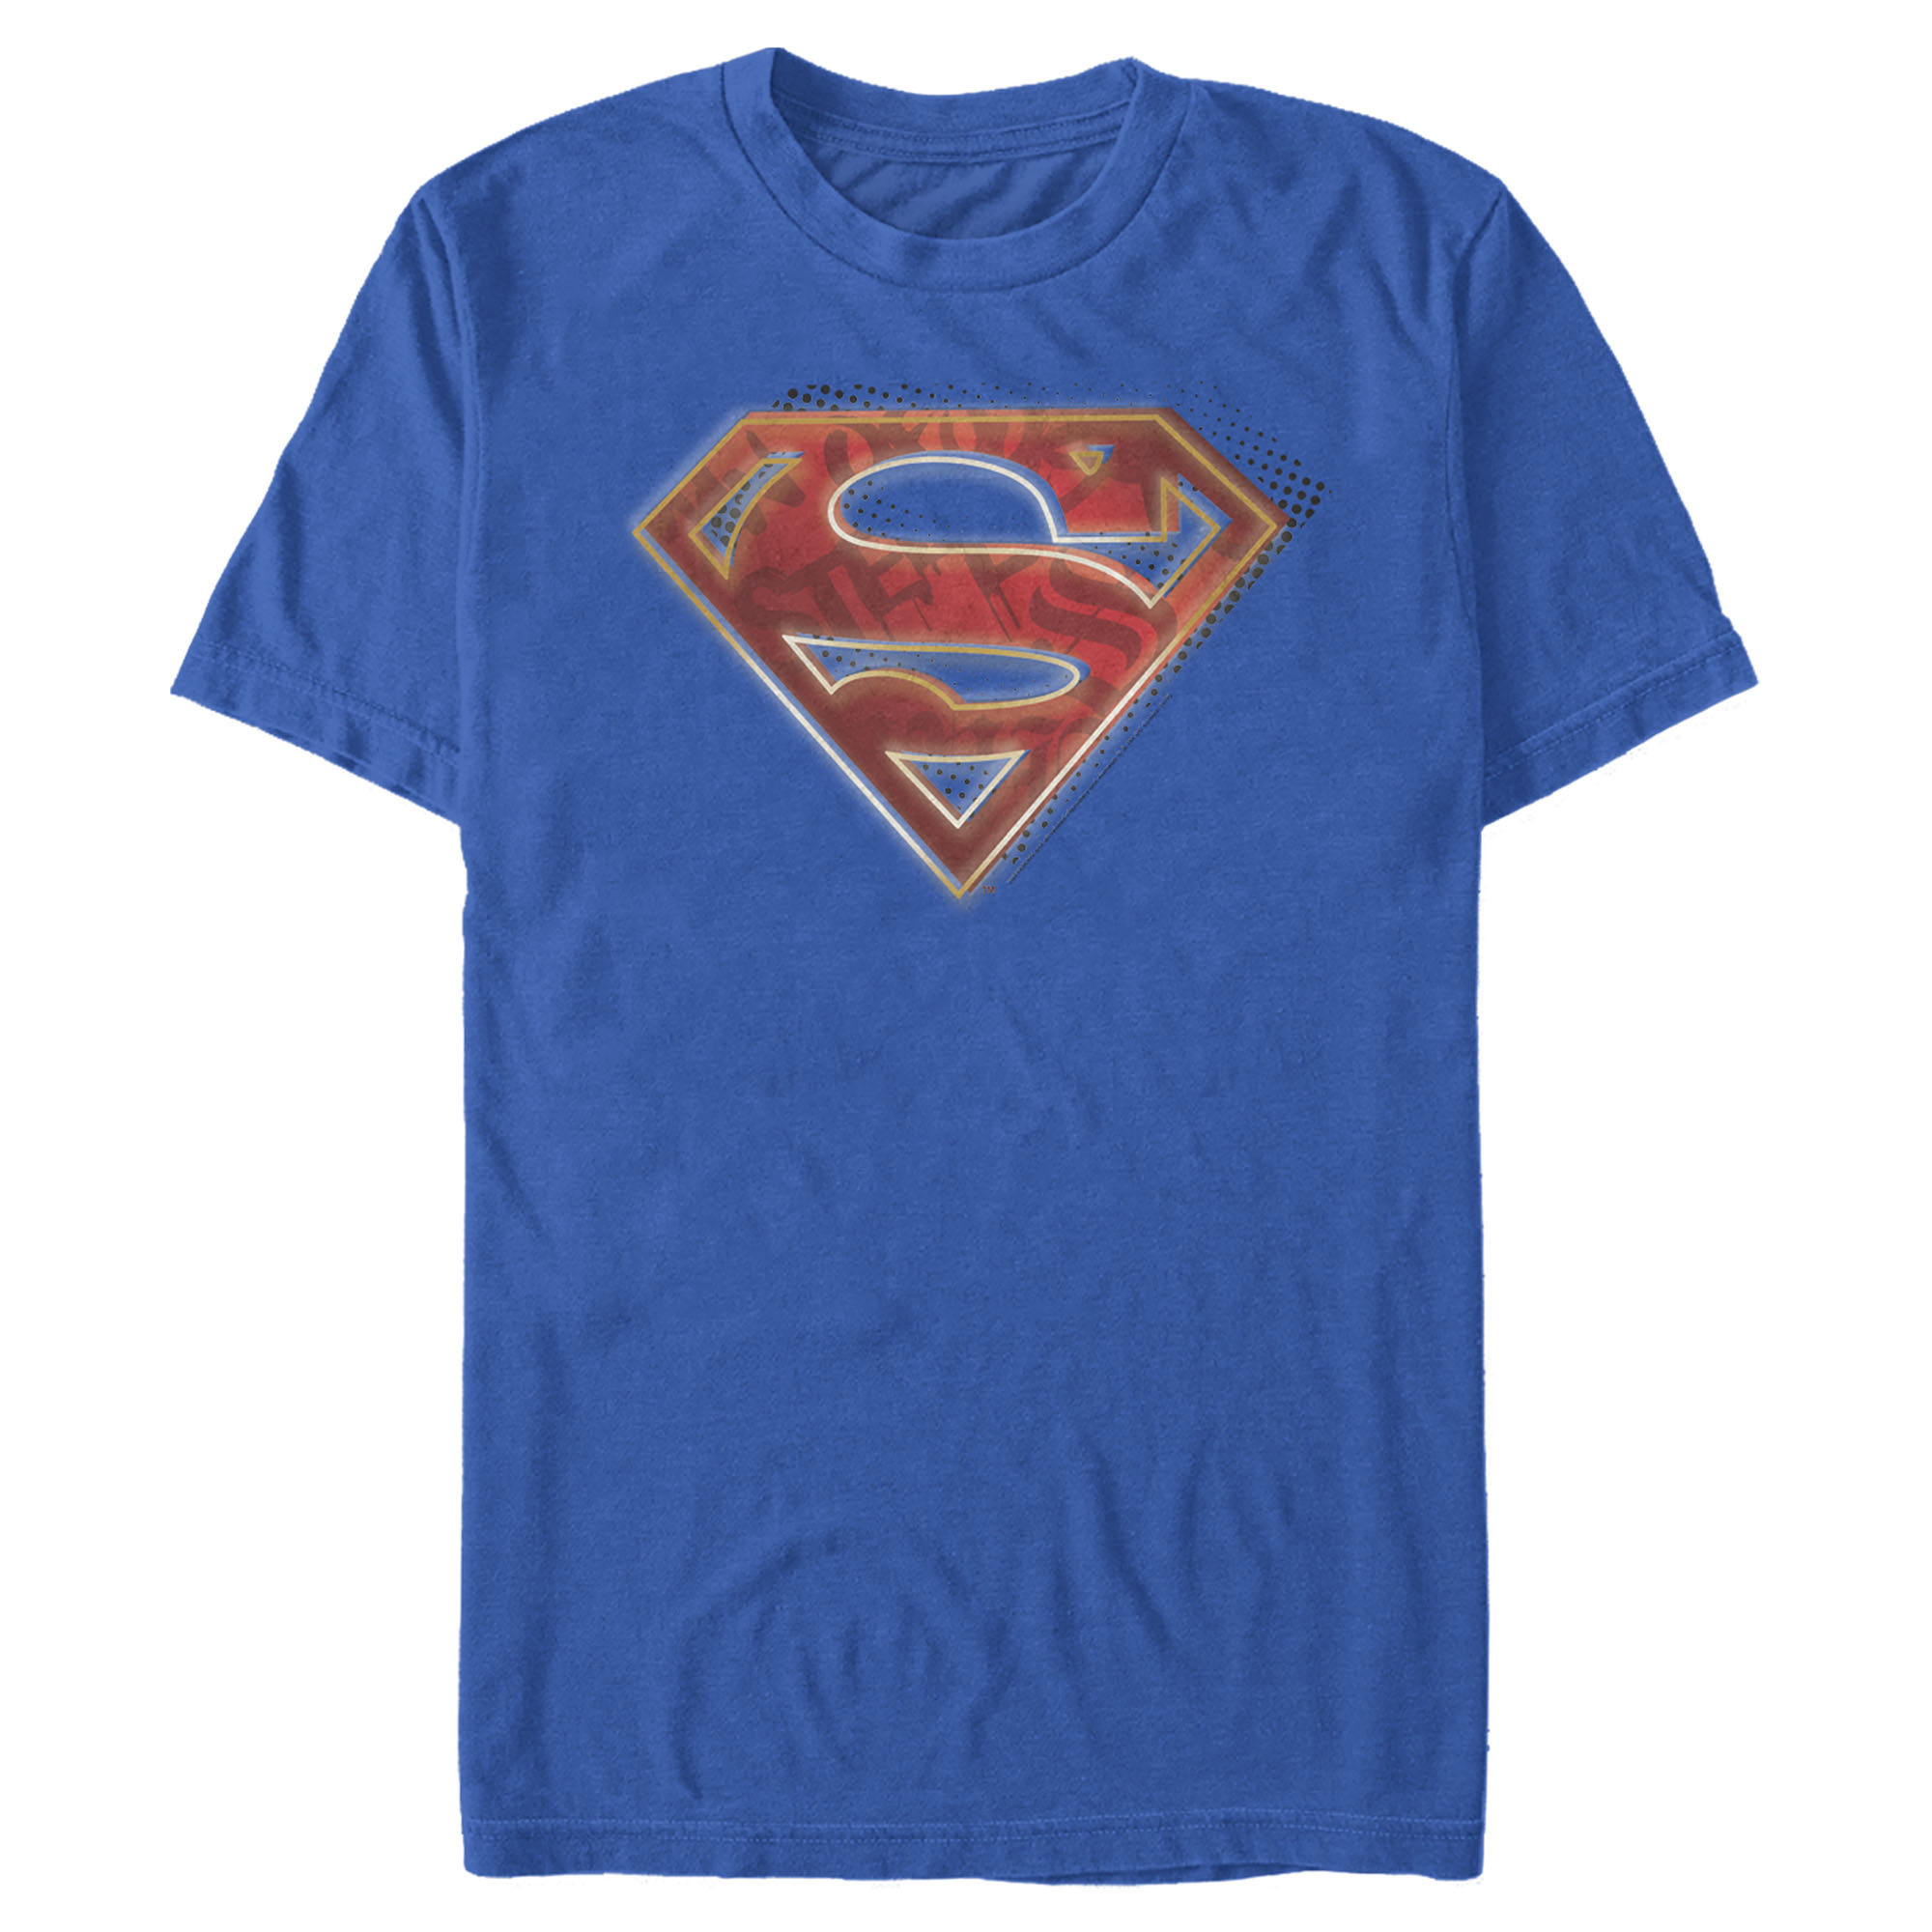 Men's Superman Logo Shadows  Graphic Tee Royal Blue 2X Large - image 1 of 4